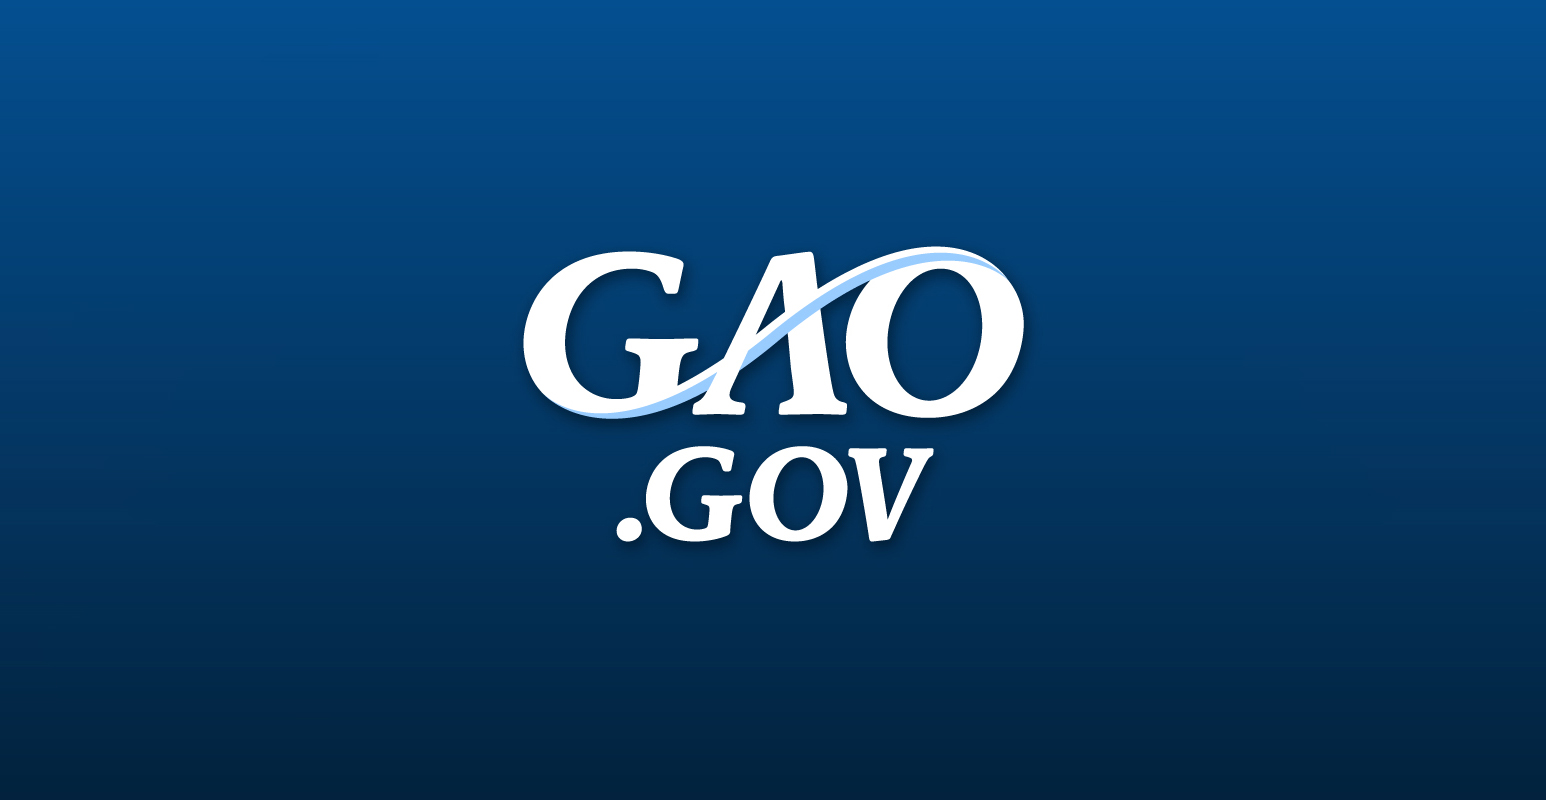 US GAO Holds Third Quarterly WGITA Webinar on “Auditing Legacy IT Systems”